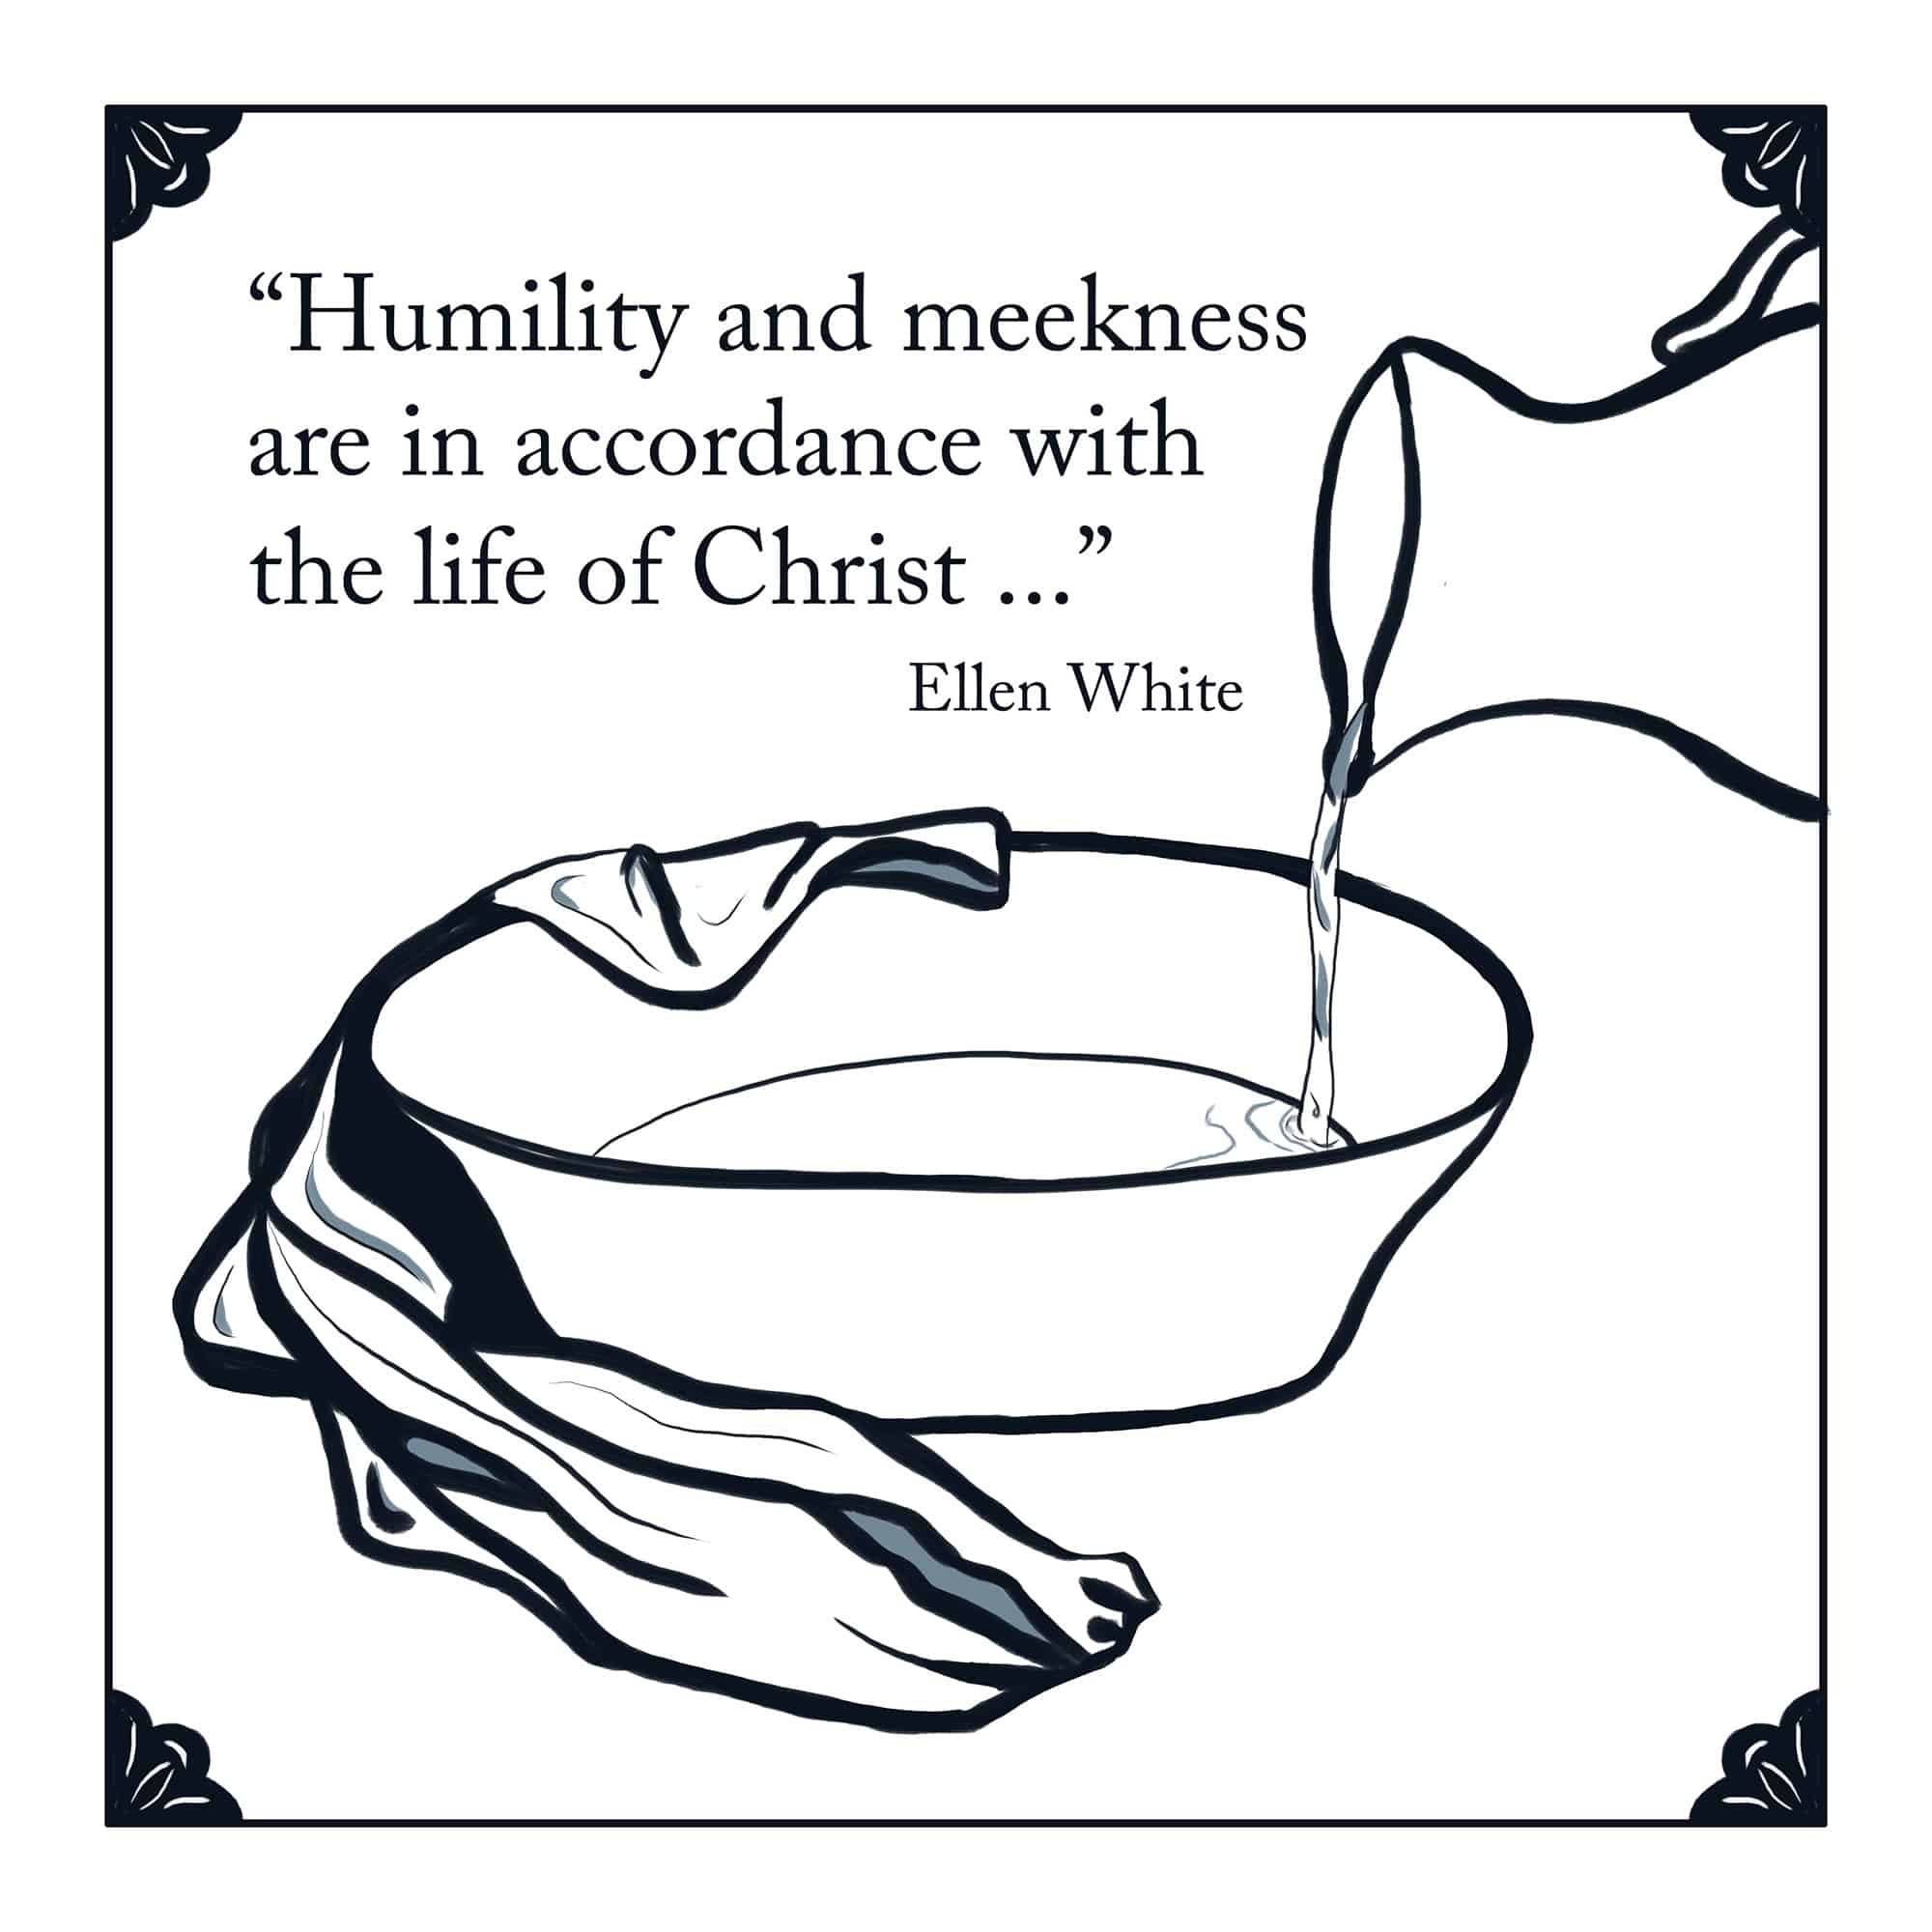 Quote from Ellen White